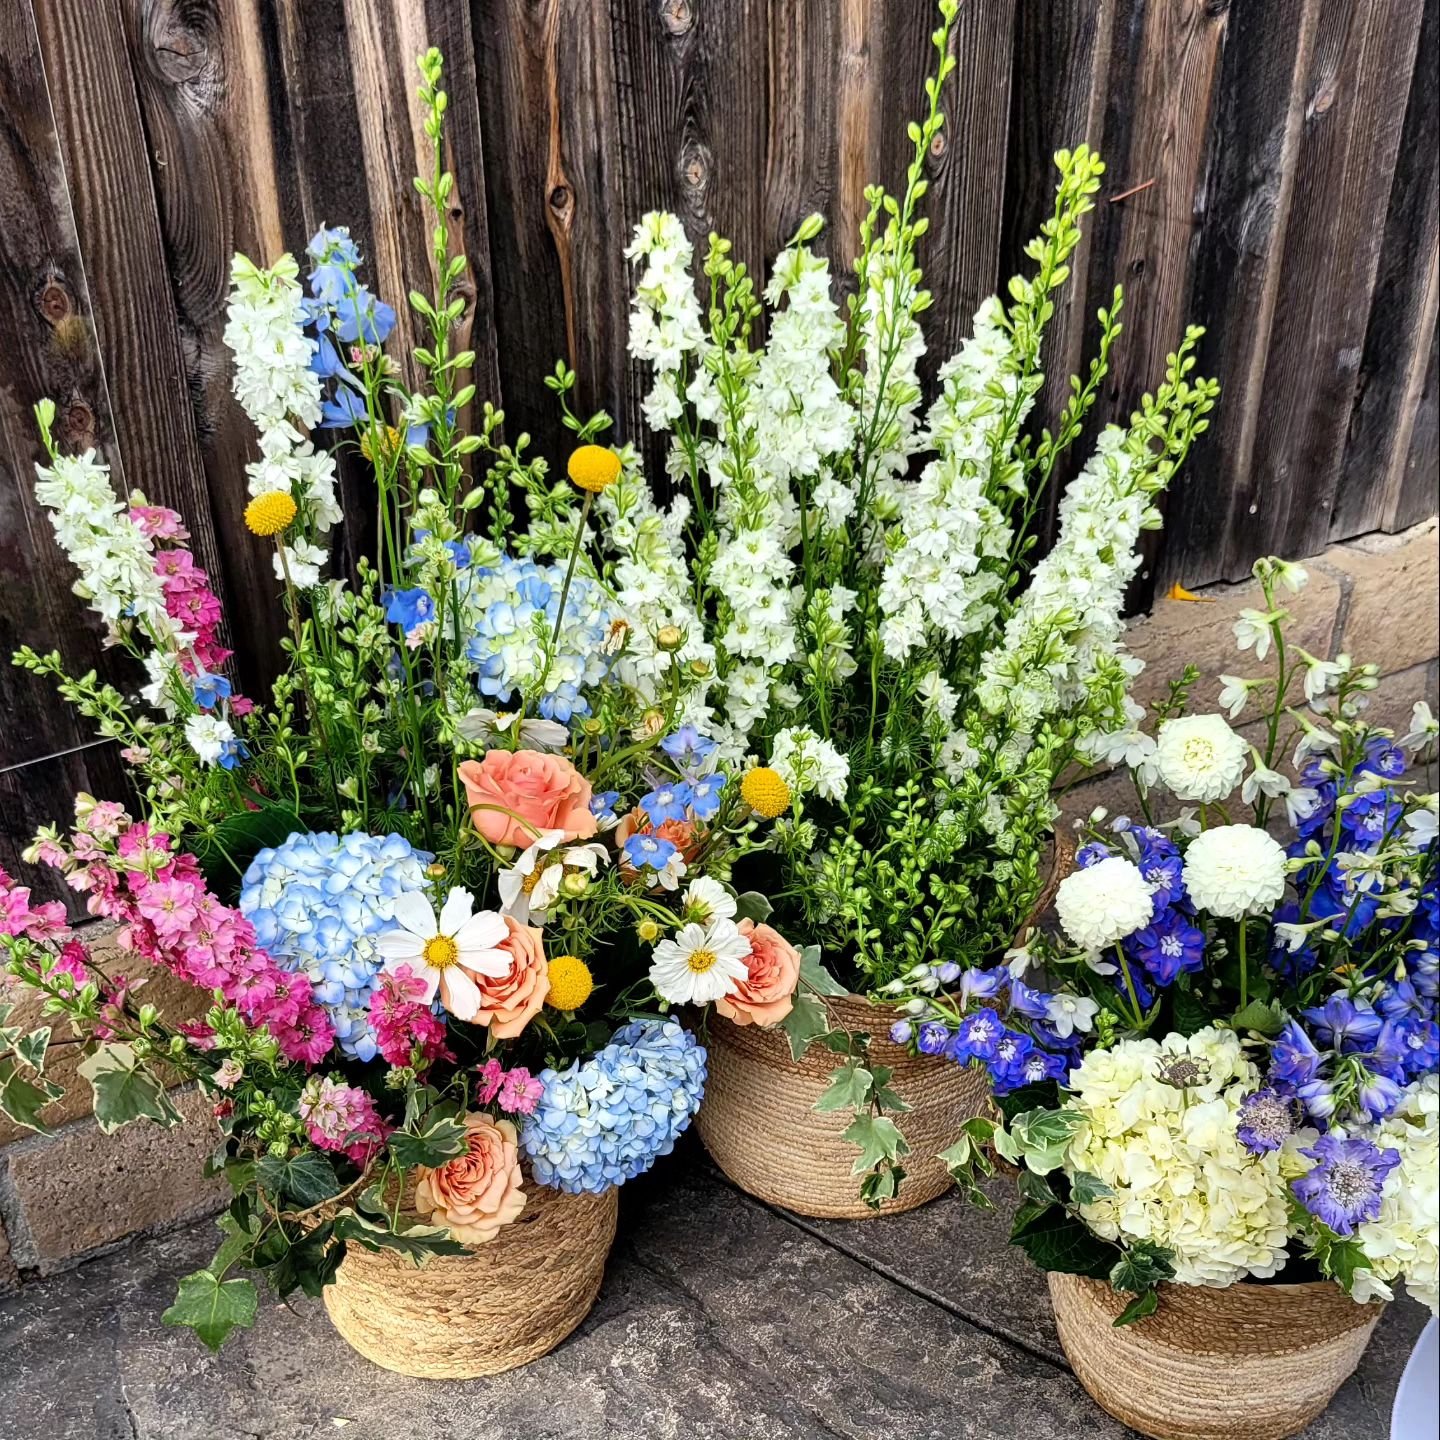 The bounty of #spring, baskets are the perfect way to display the beautiful blooms.#Flowers #WeddingEntrance #BasketFlowers #BasketArrangement #RainyDiane #PassionAndWeeds #Larkspur #Delphinium
#Hydrangea #Rose #Cosmos